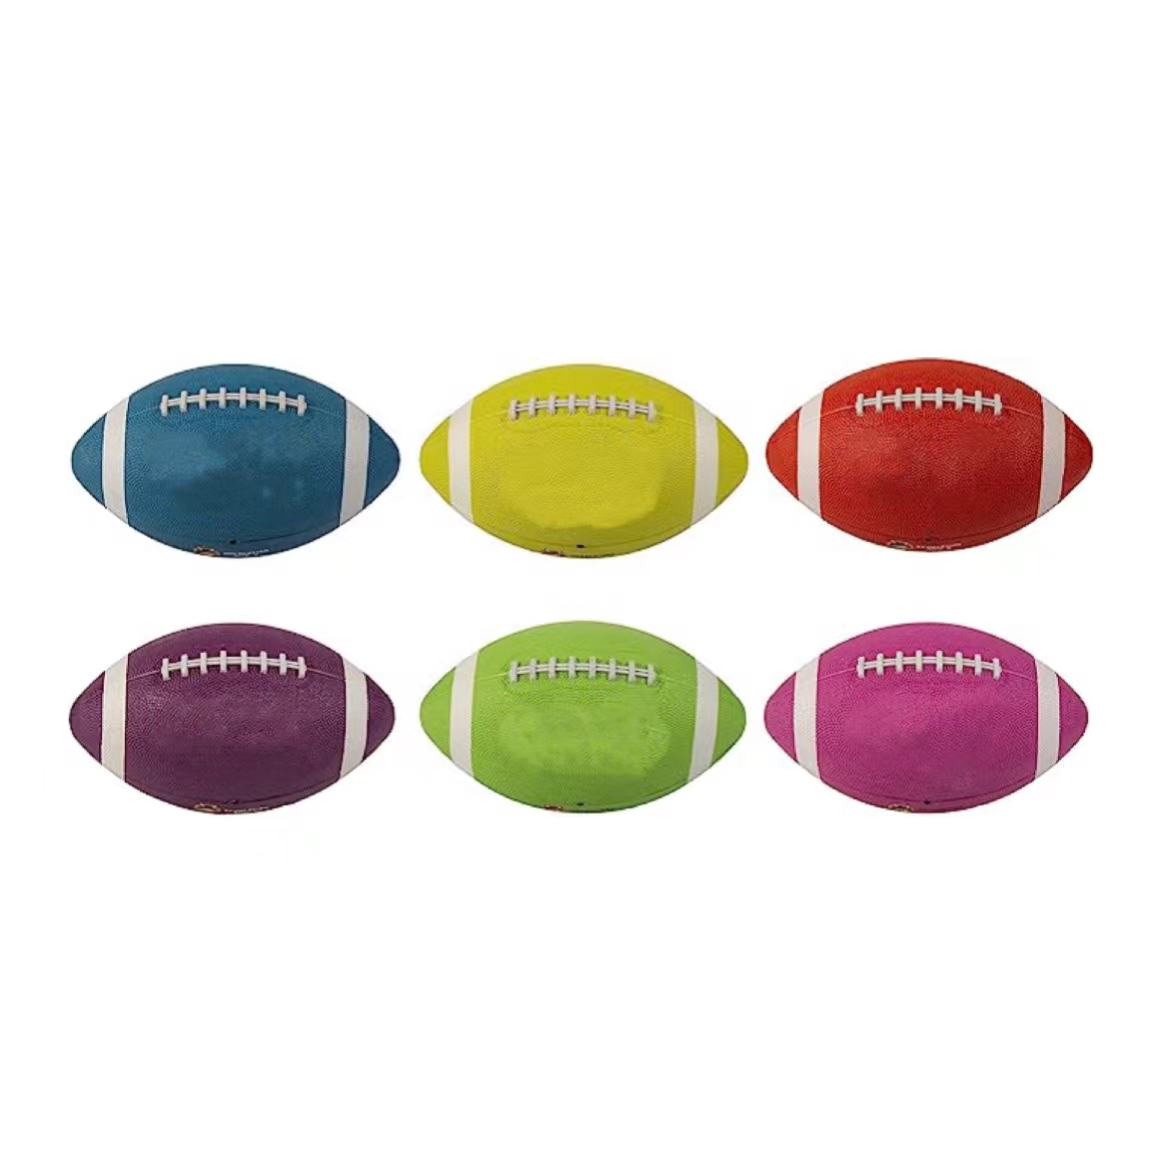 Athletics Rubber Playground Balls | Includes Pump & Storage Bag